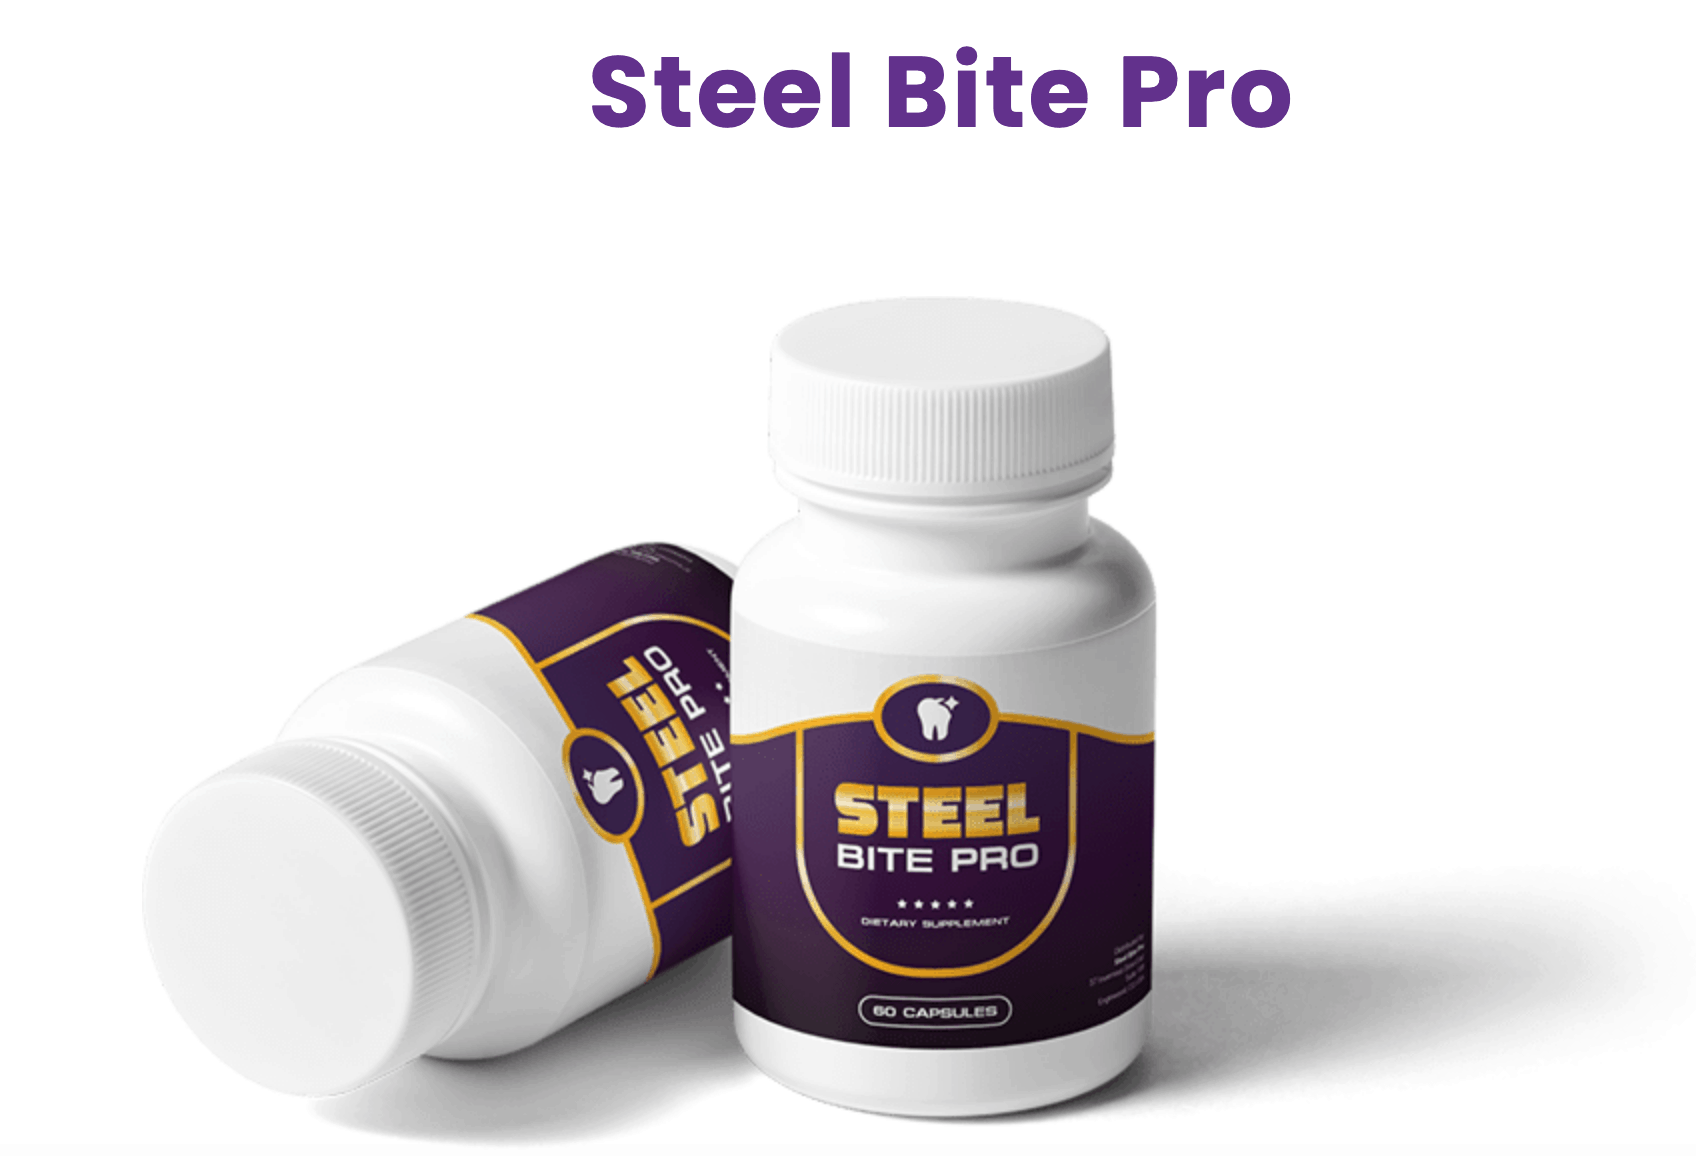 Steel Bite Pro Customer reviews